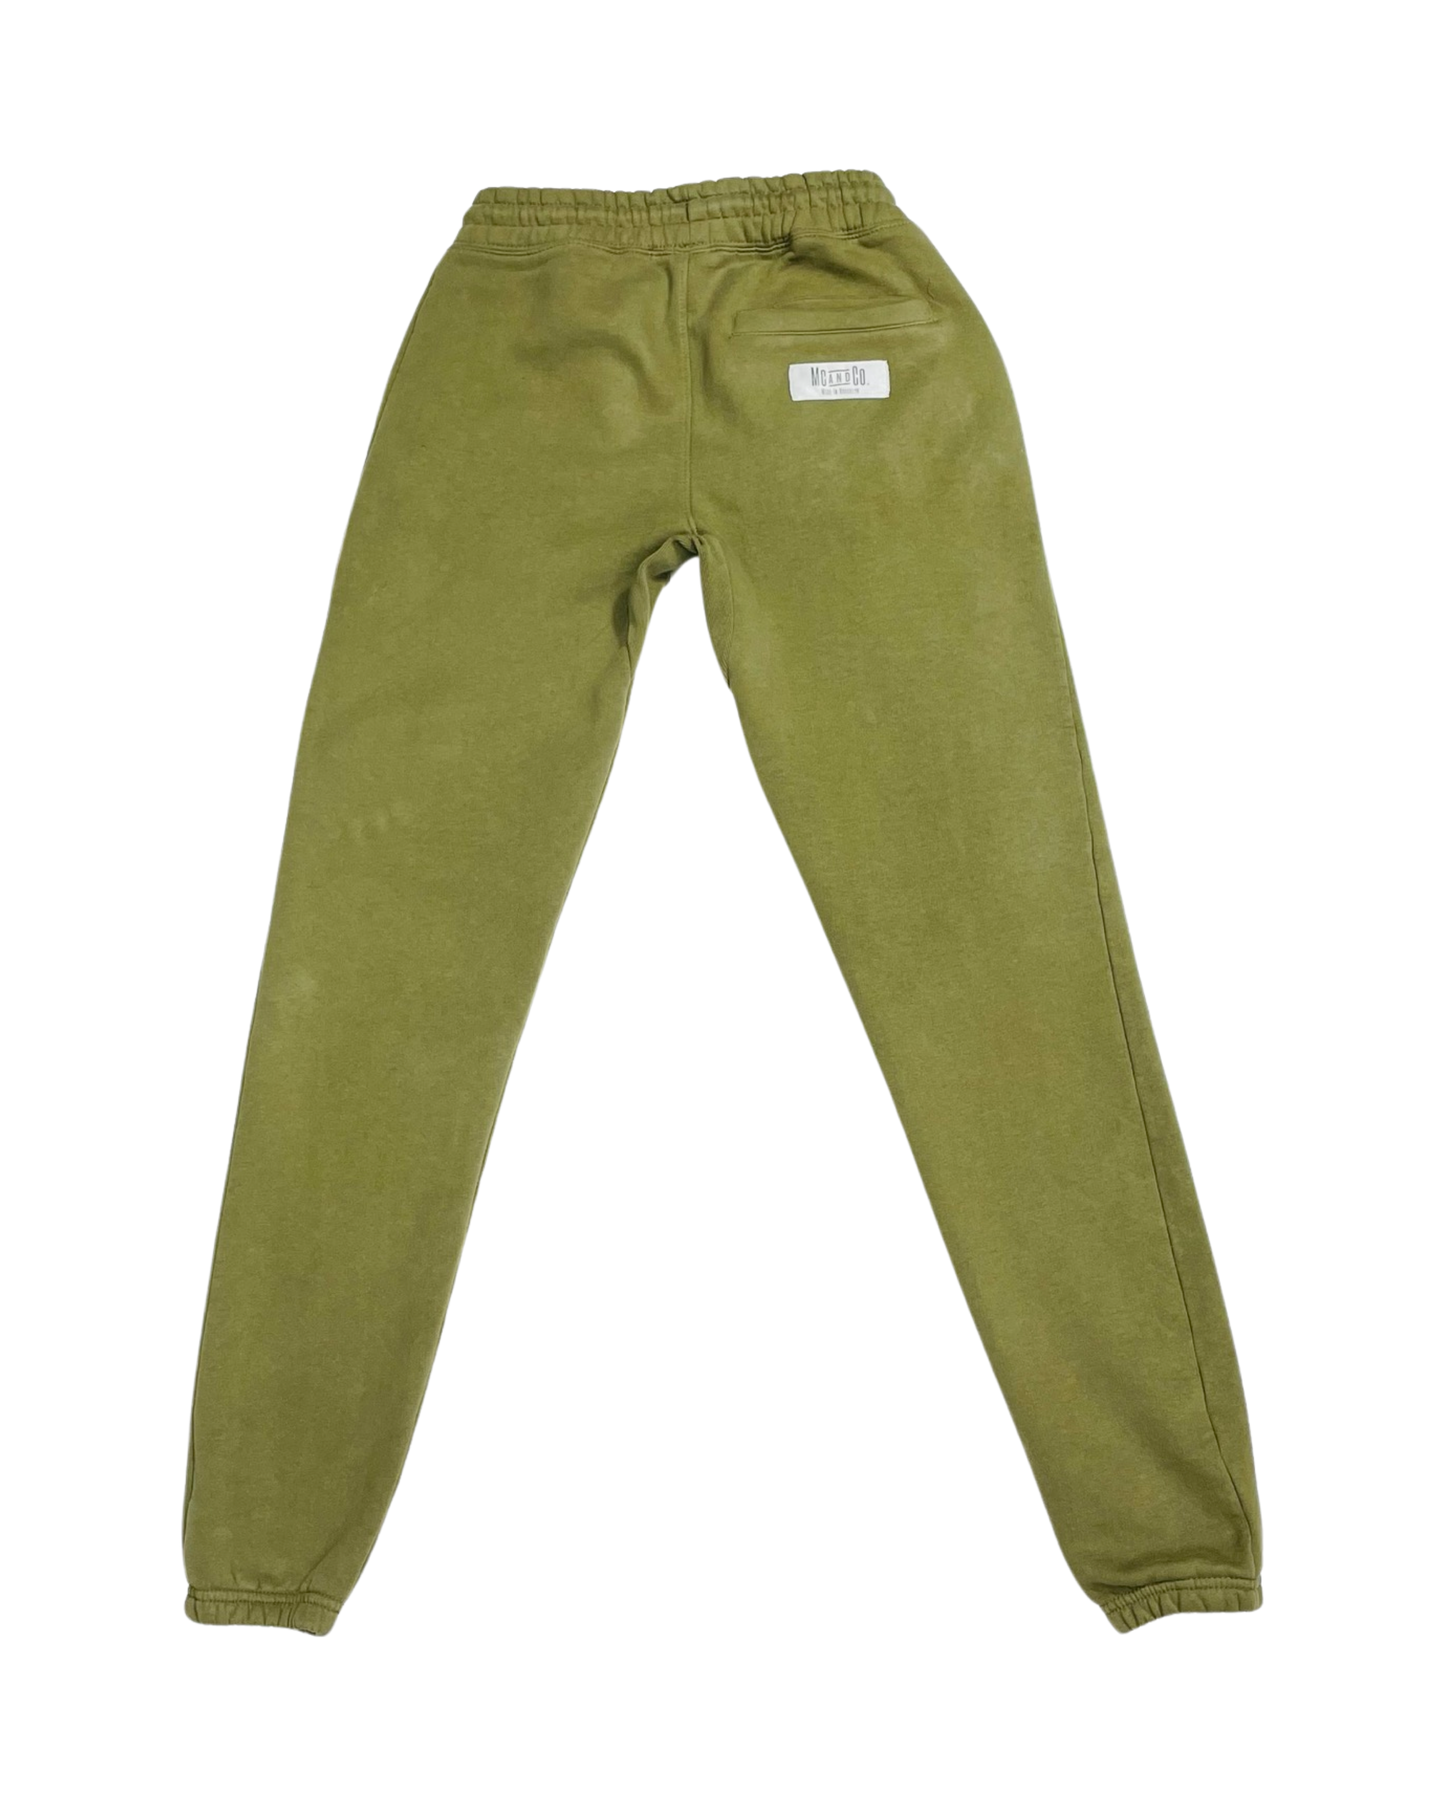 Mc & Co. Heritage Logo “Olive Green” Heavyweight Organic Cotton Embroidery Sweatpants